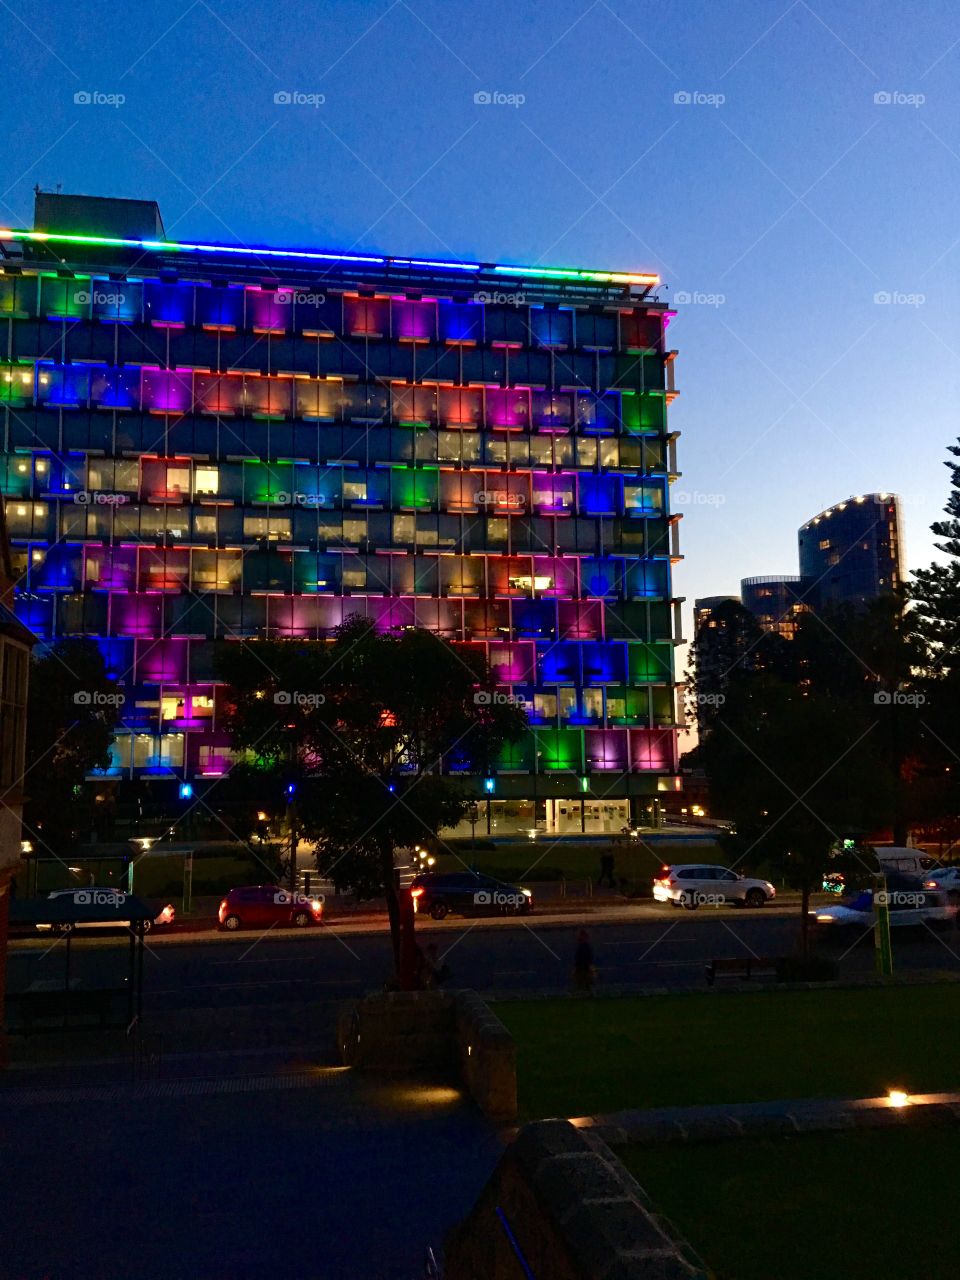 Interesting LED illumination on the building: Council House, Perth, Western Australia.